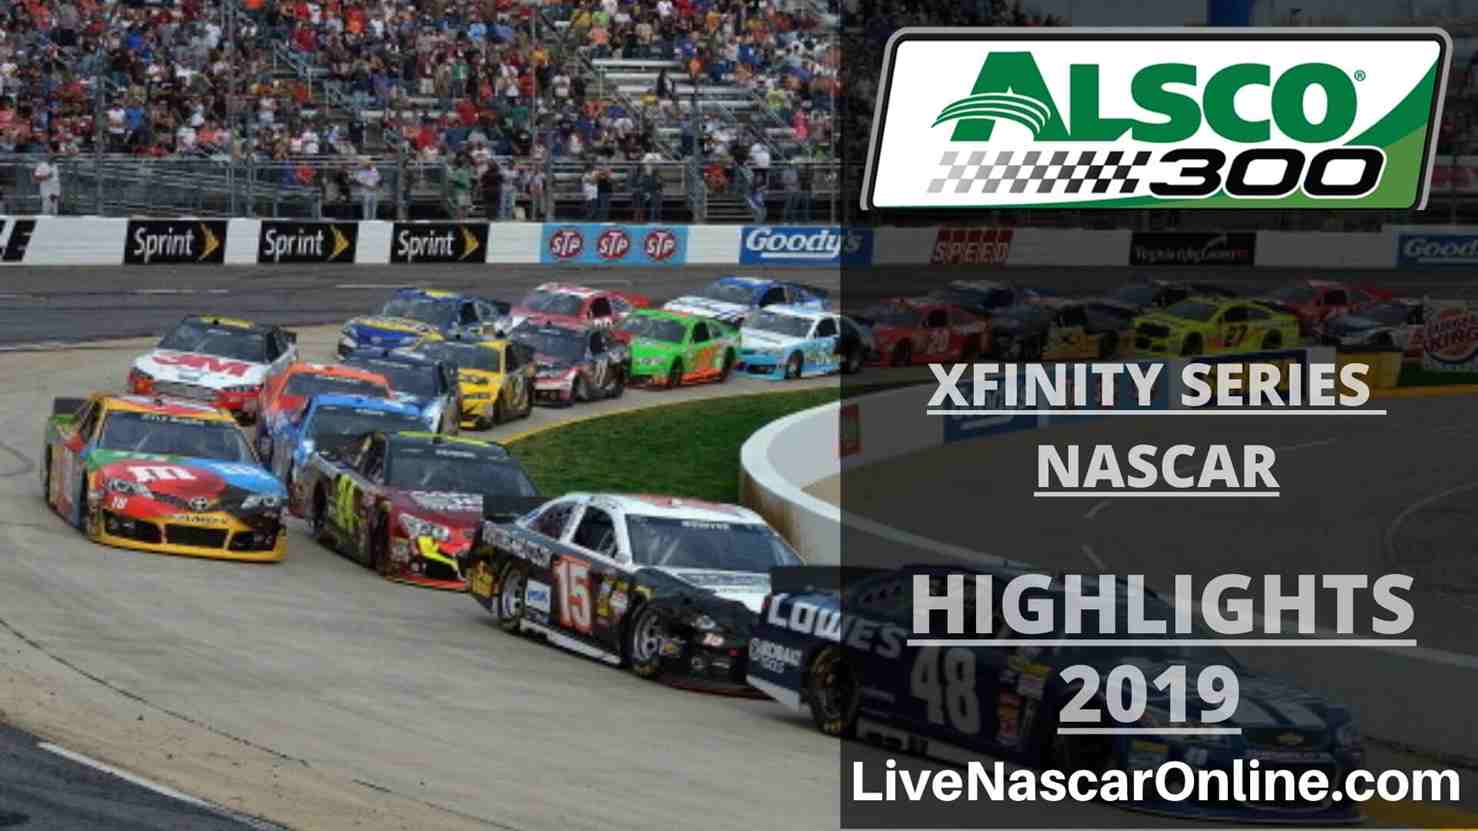 NASCAR Xfinity Series ALSCO 300 Highlights 2019